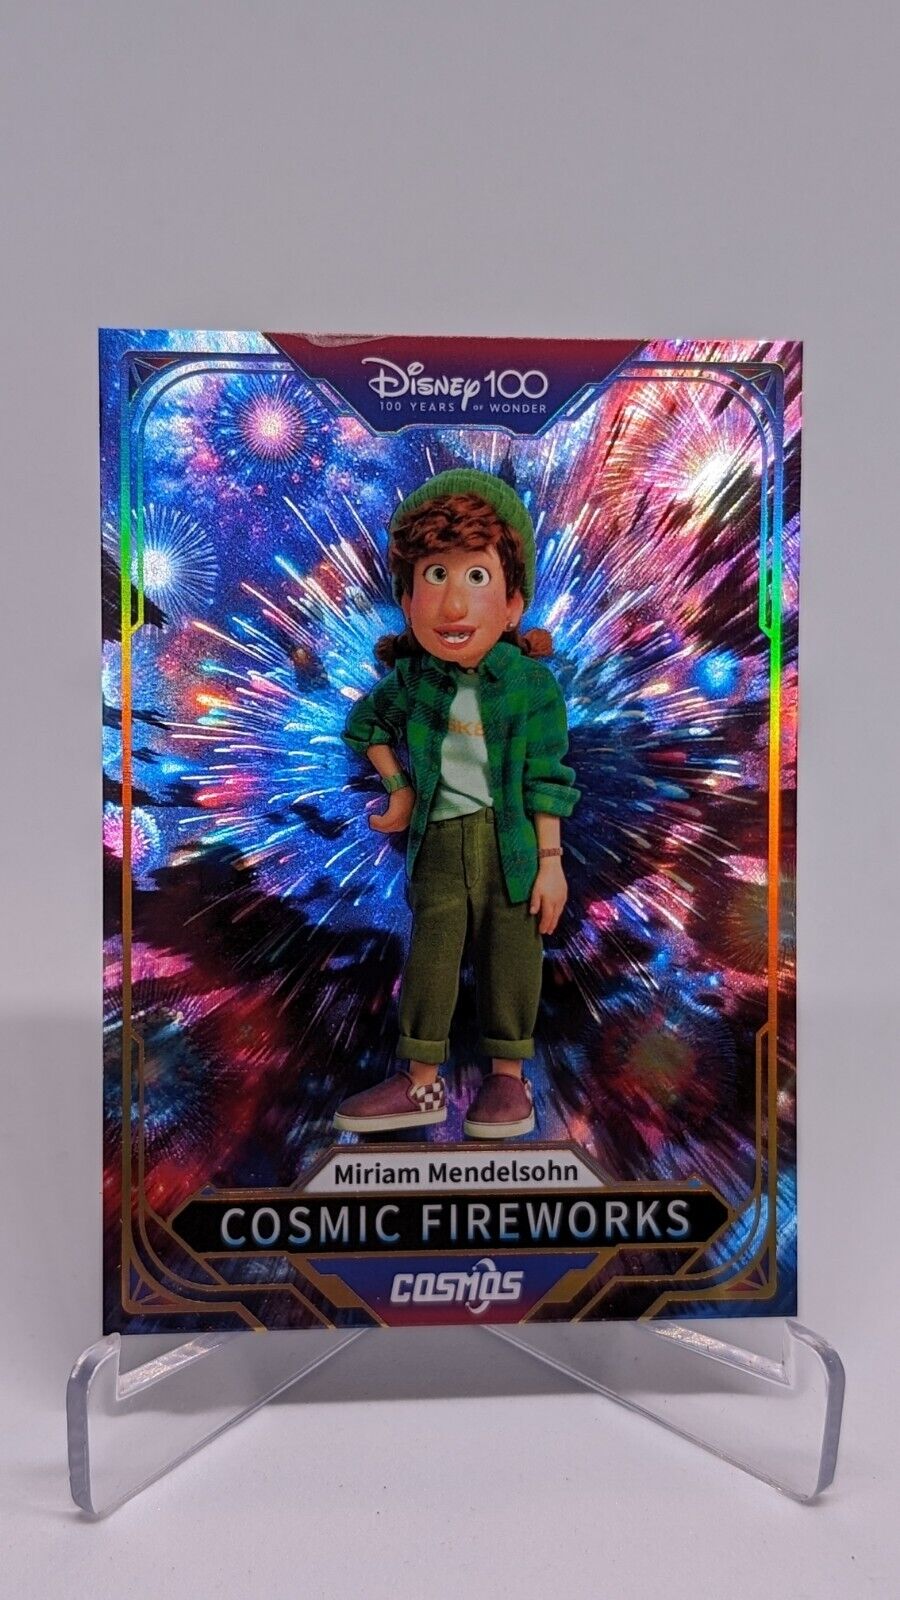 Miriam Mendelsohn Kakawow Cosmos Disney 100 Cosmic Fireworks CDQ-DZ-203